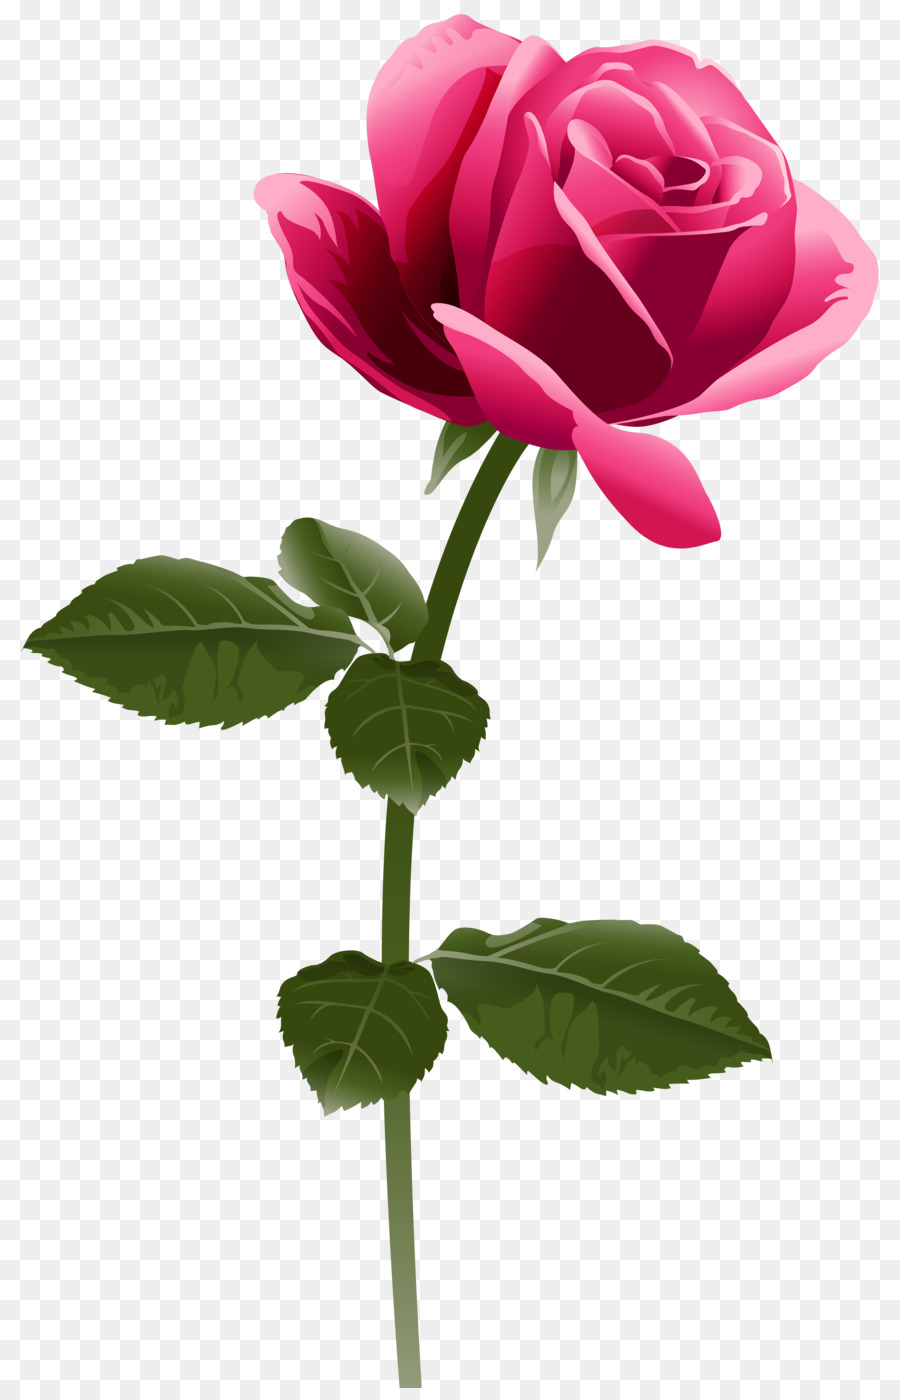 Rose Pink flowers Clip art - fuchsia frame png download - 5187*8000 - Free Transparent Rose png Download.